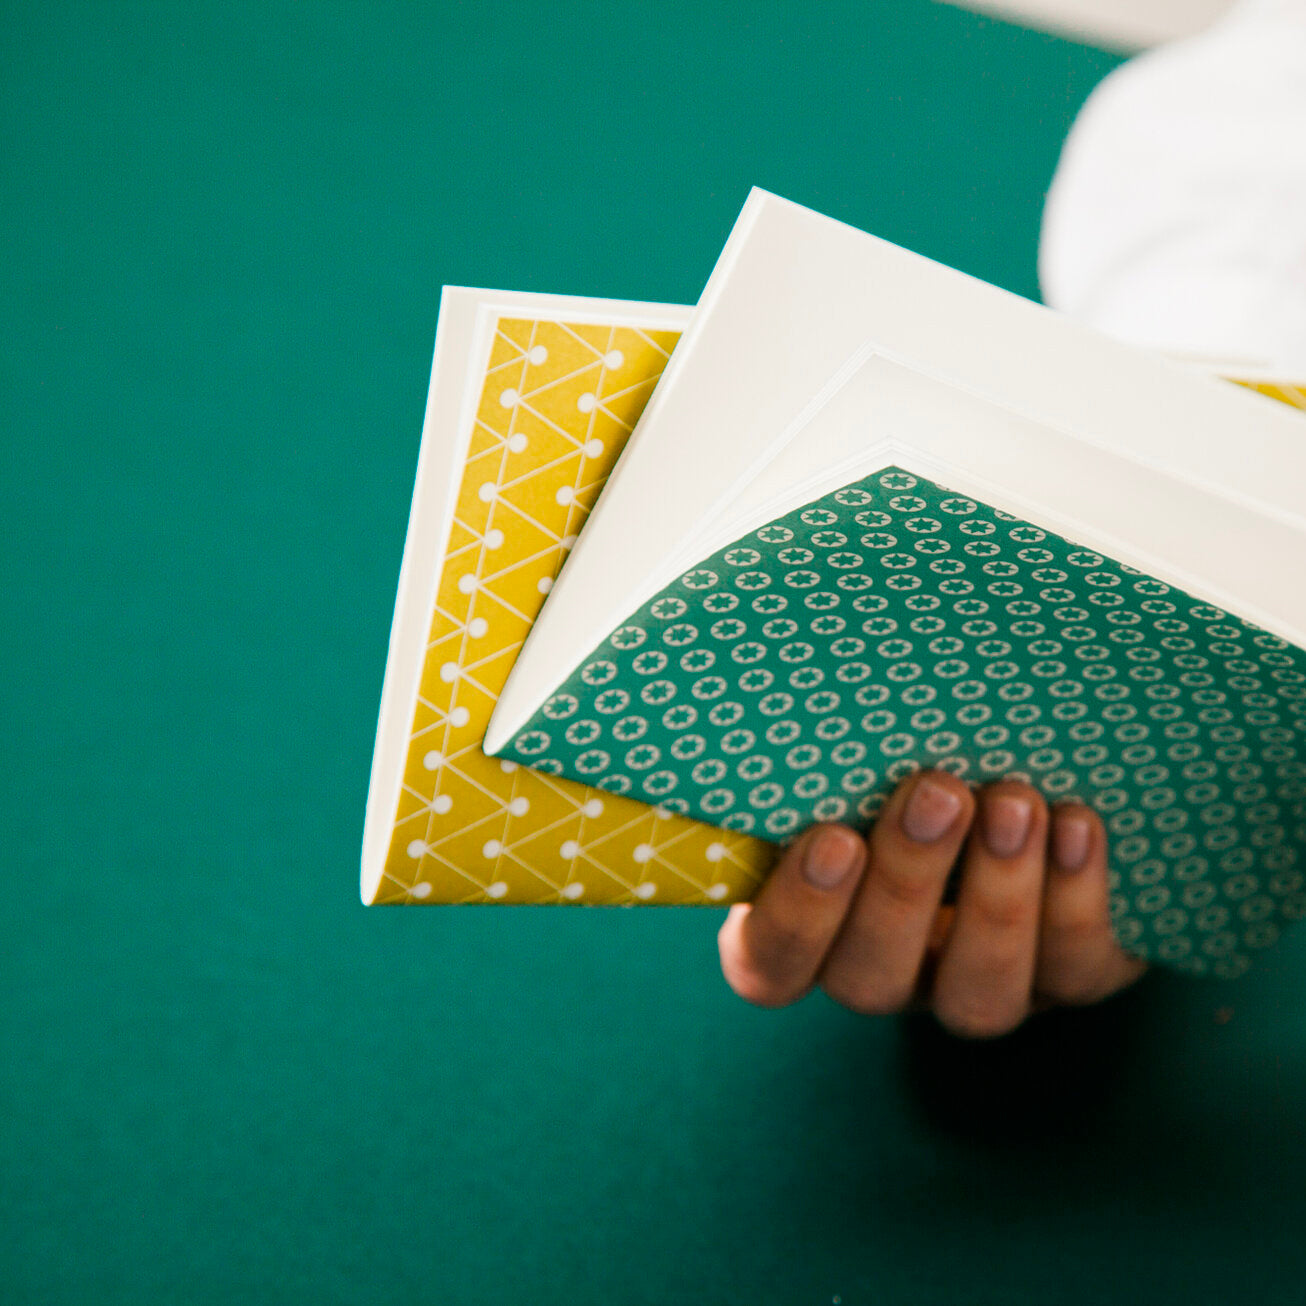 Set of 2 Handcrafted Pocket Books - Dash & Tiny Stars print